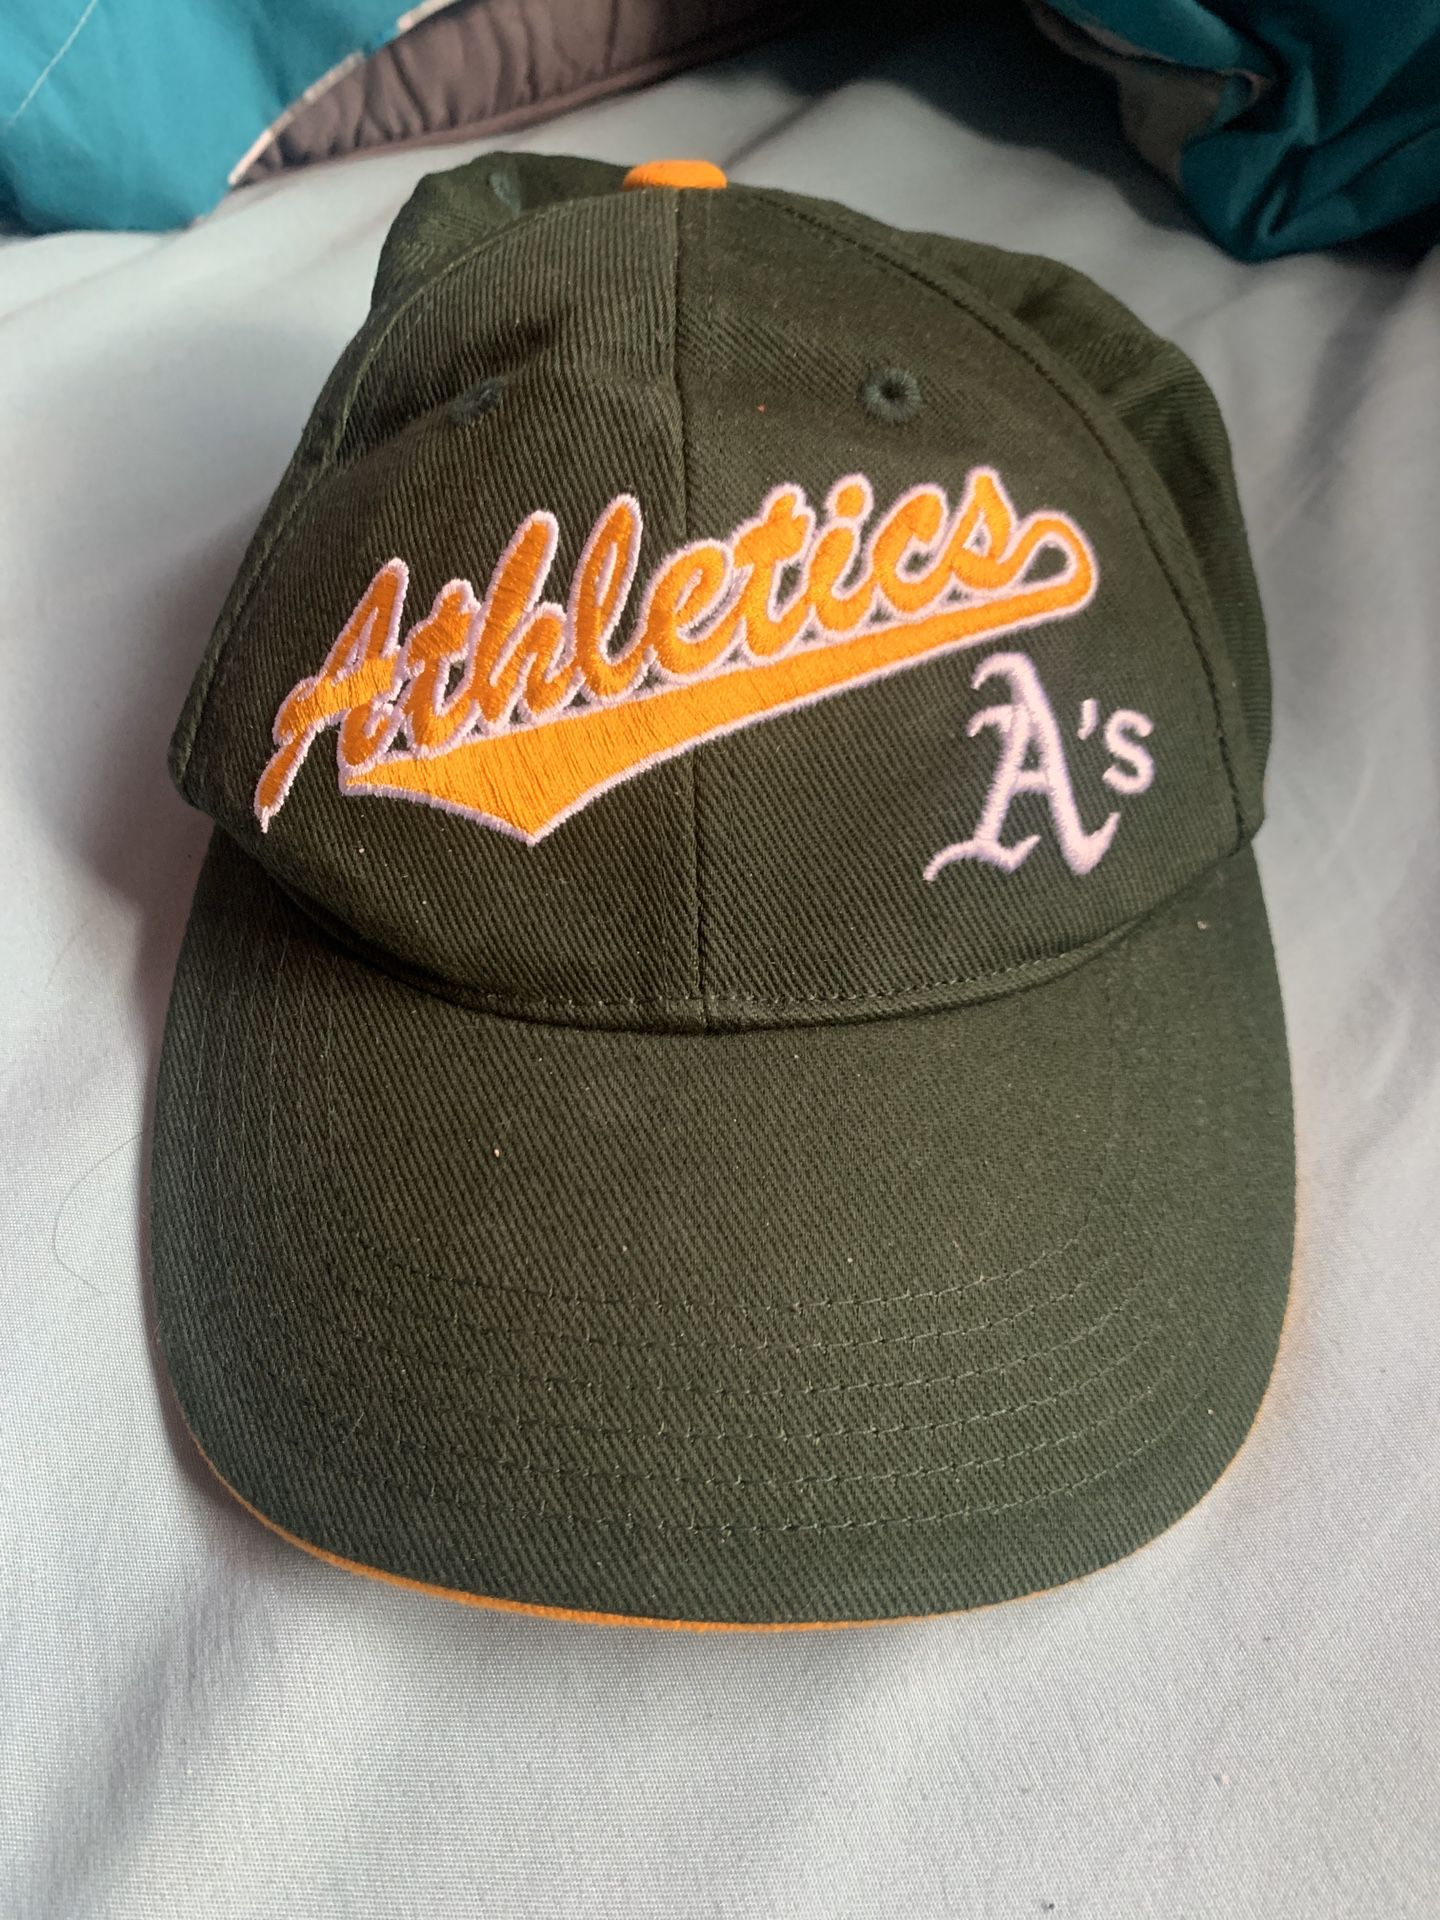 Oakland A’s baseball cap